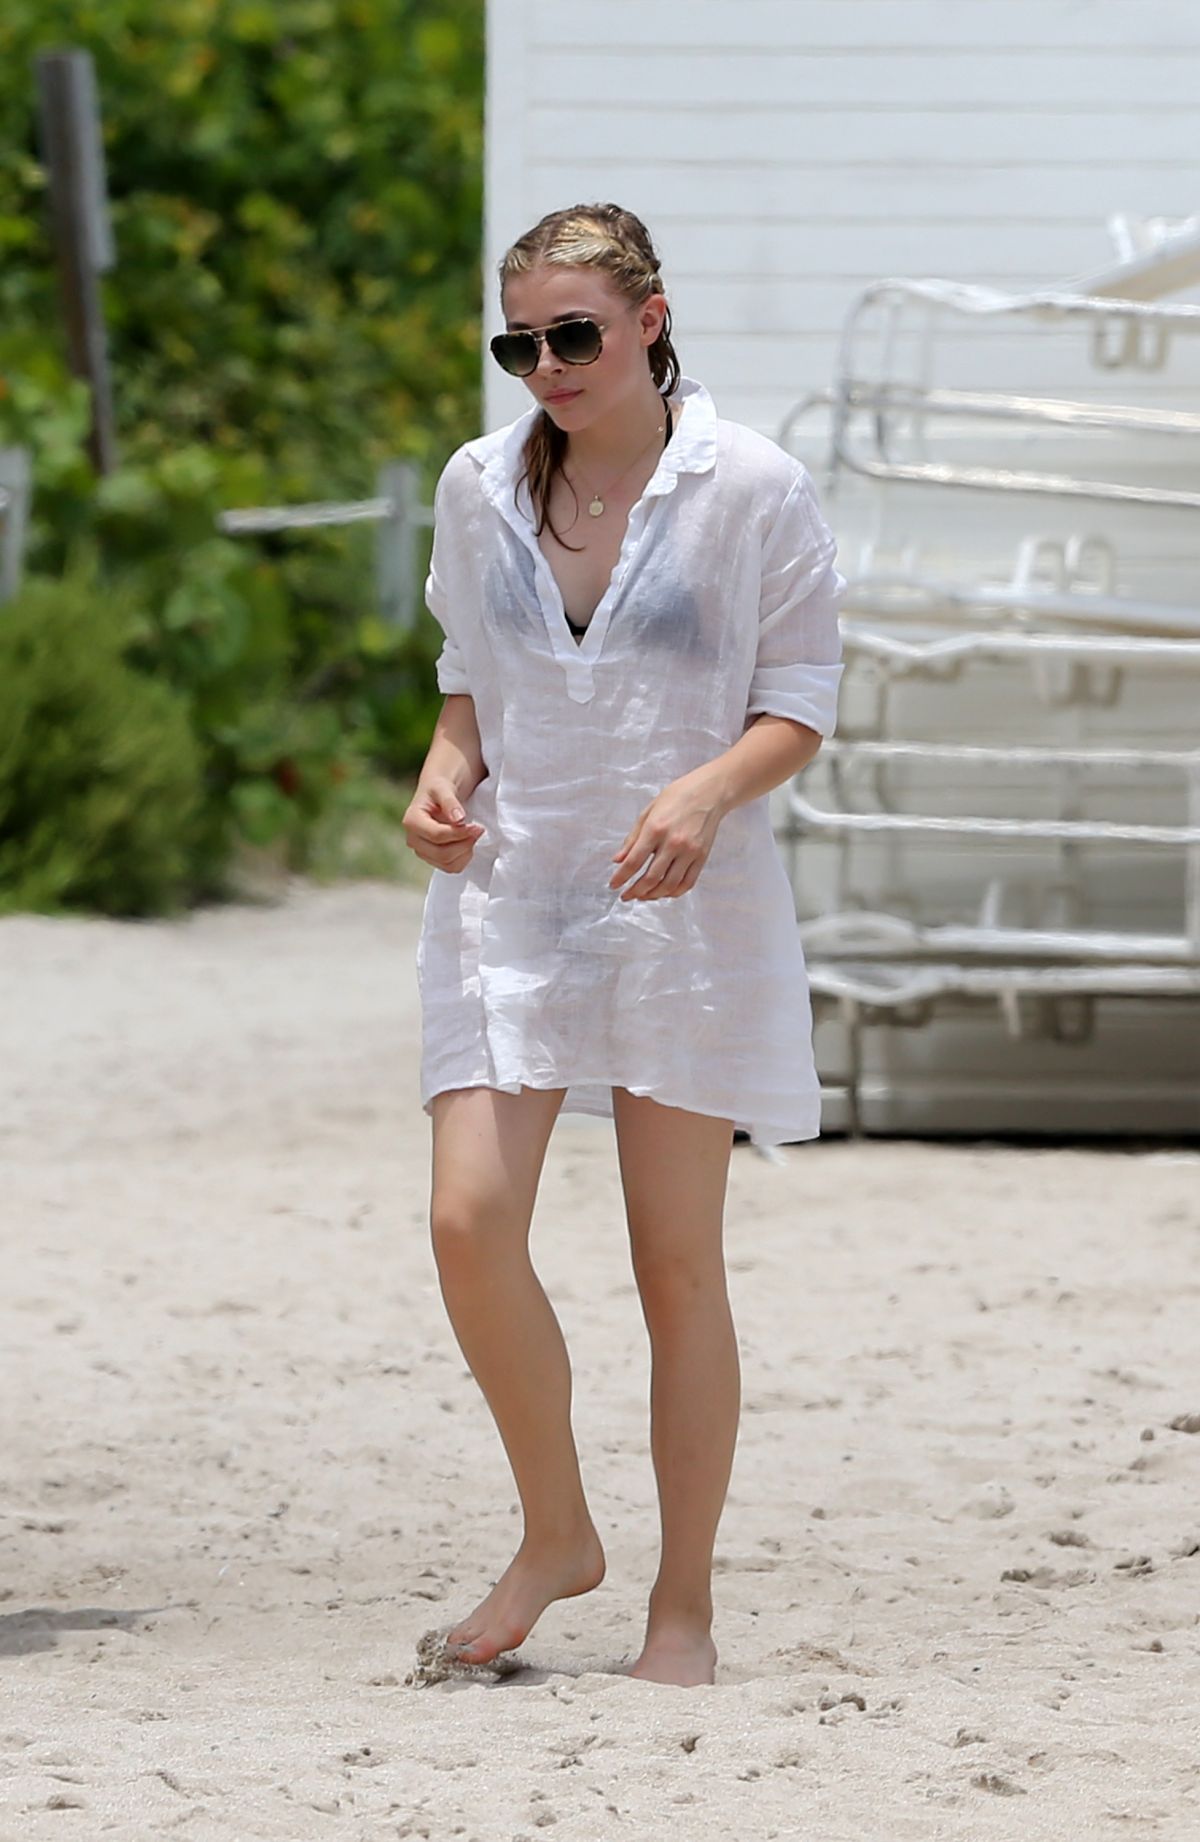 CHLOE MORETZ in Bikini at a Beach in Miami – HawtCelebs